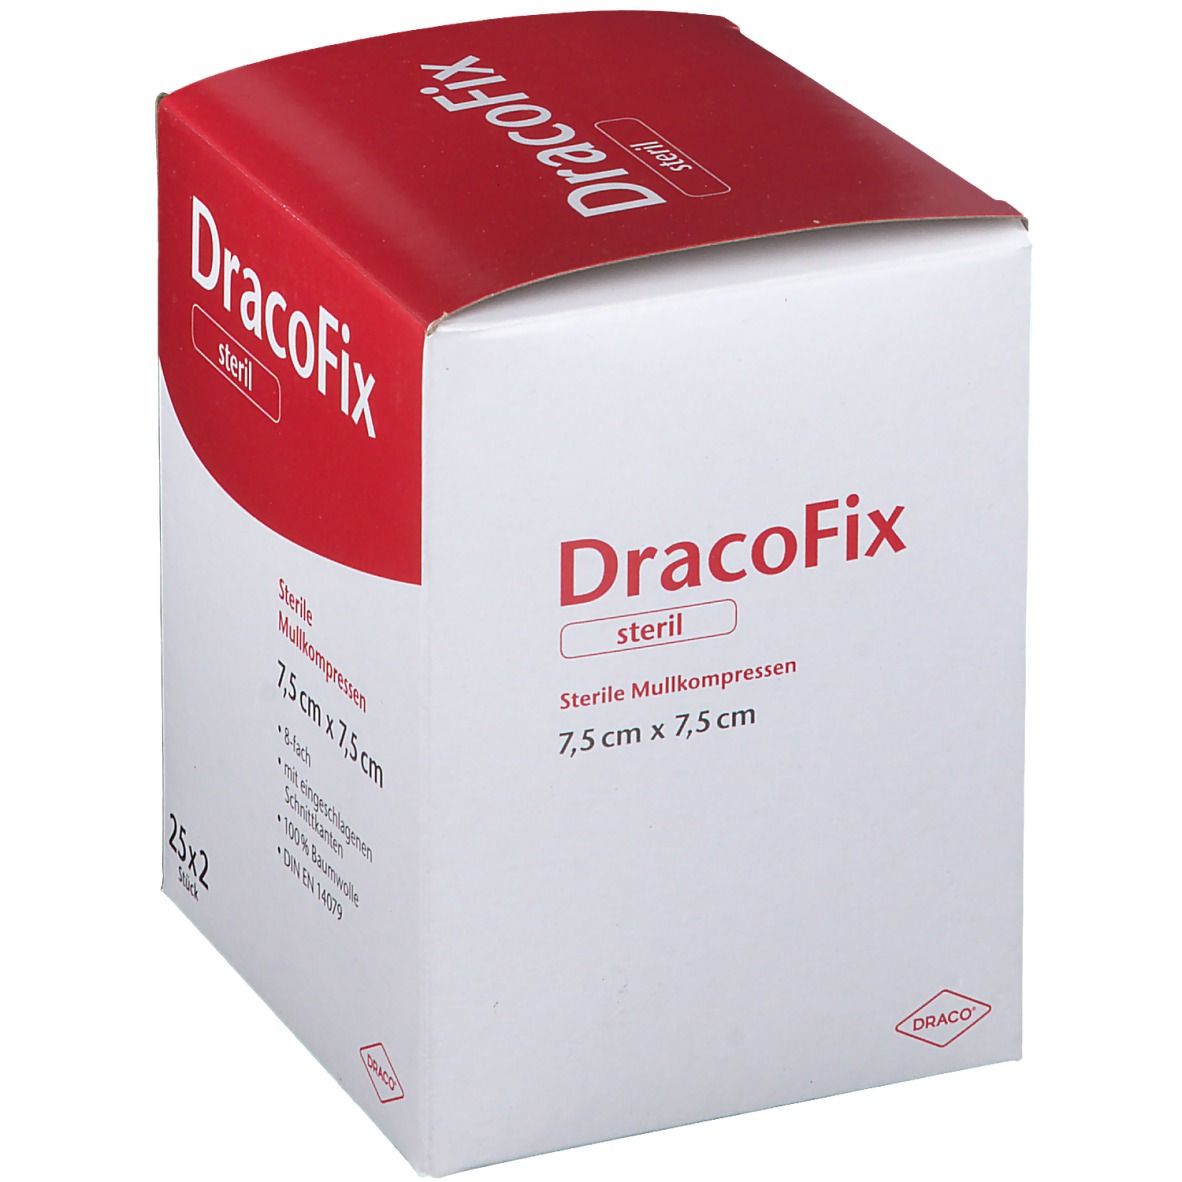 DracoFix Mullkompressen steril 8fach 7,5x7,5cm